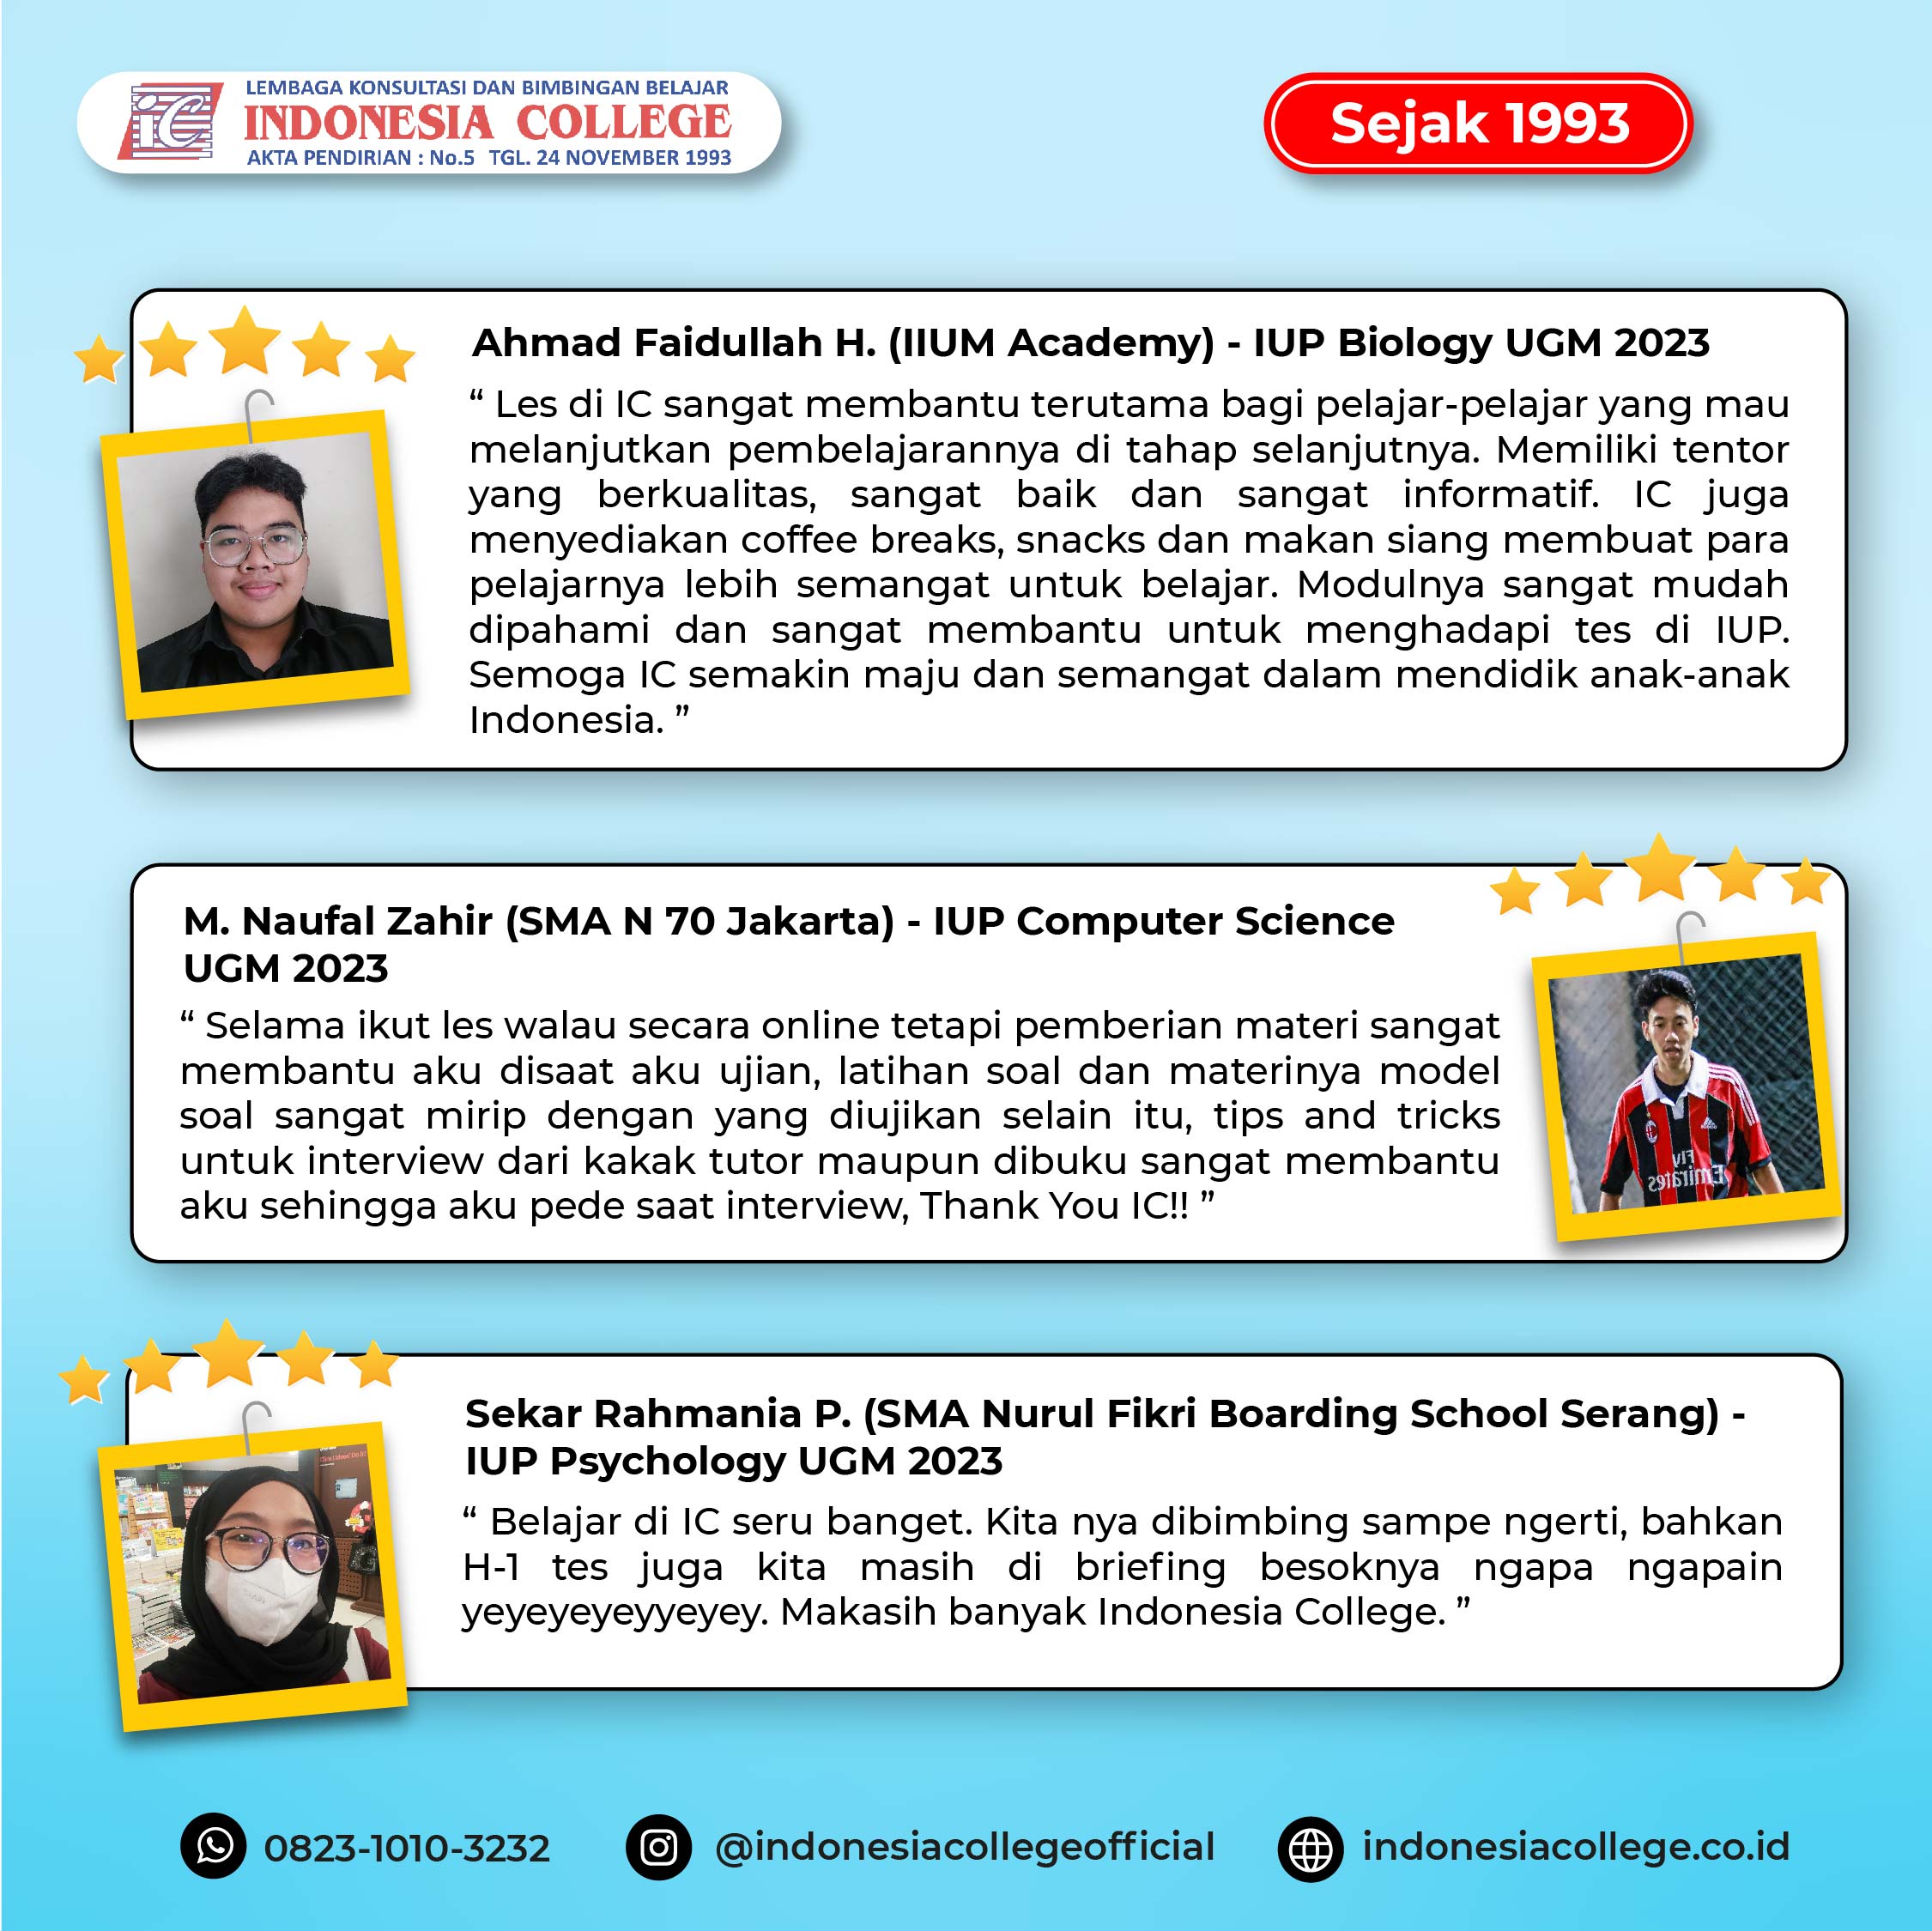 Testimoni Siswa IUP UGM 2023 - Indonesia College